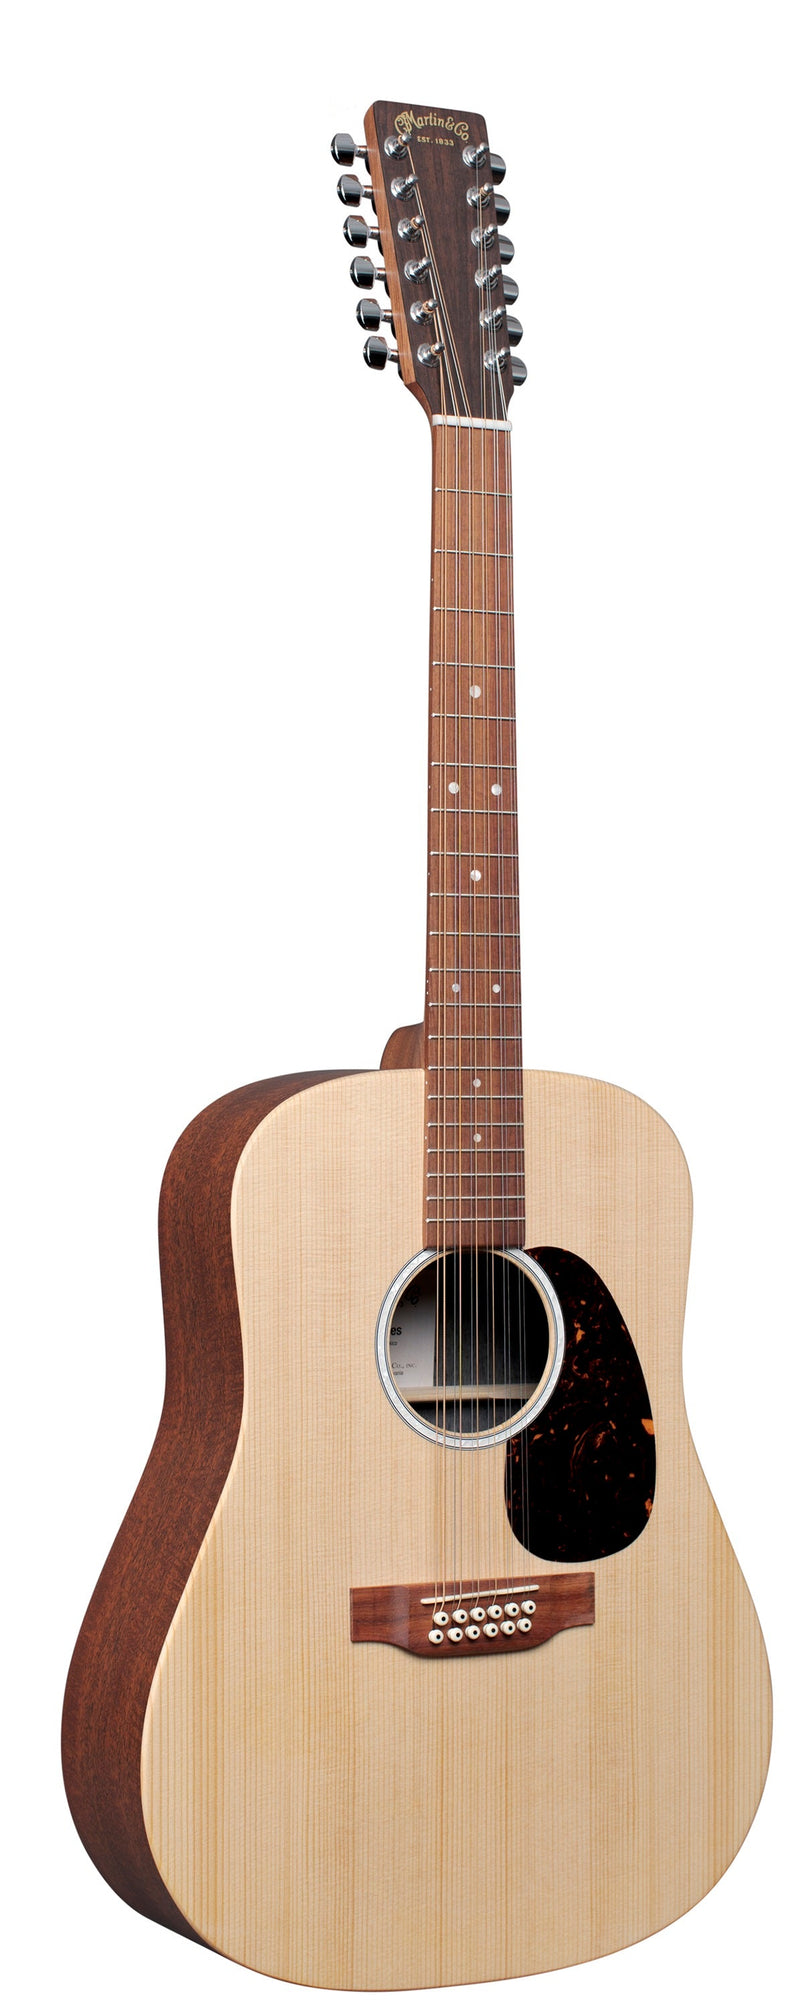 C.F. Martin D-X2E 12 12 String Acoustic Guitar Spokane sale Hoffman Music 0087990